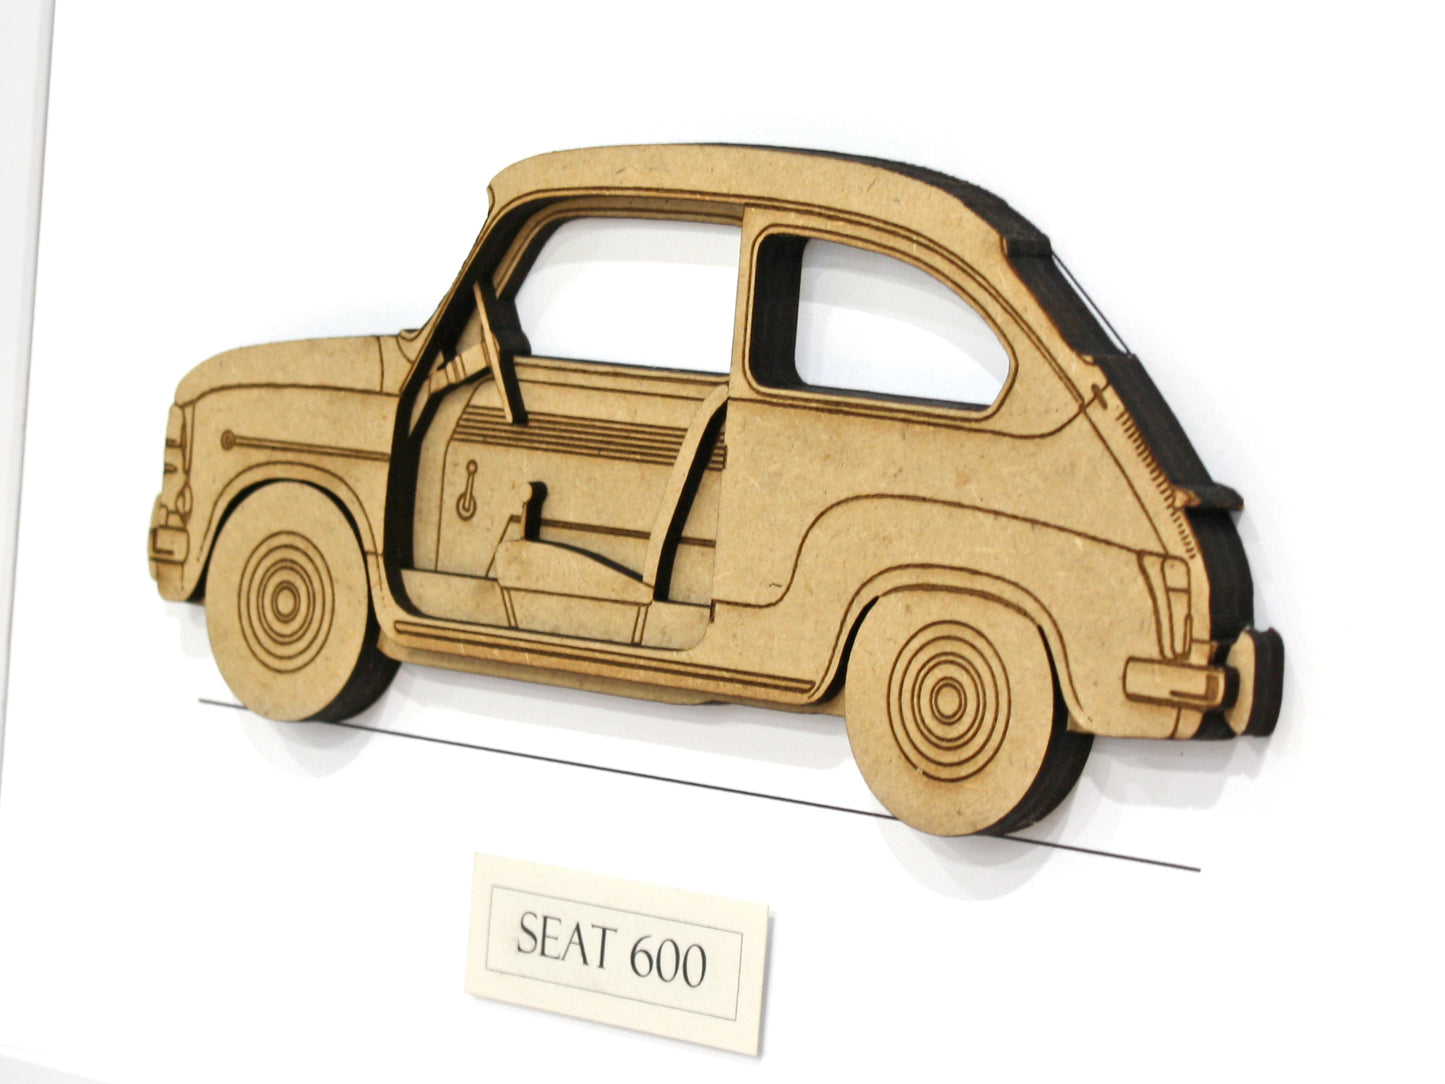 Seat 600 automotive art